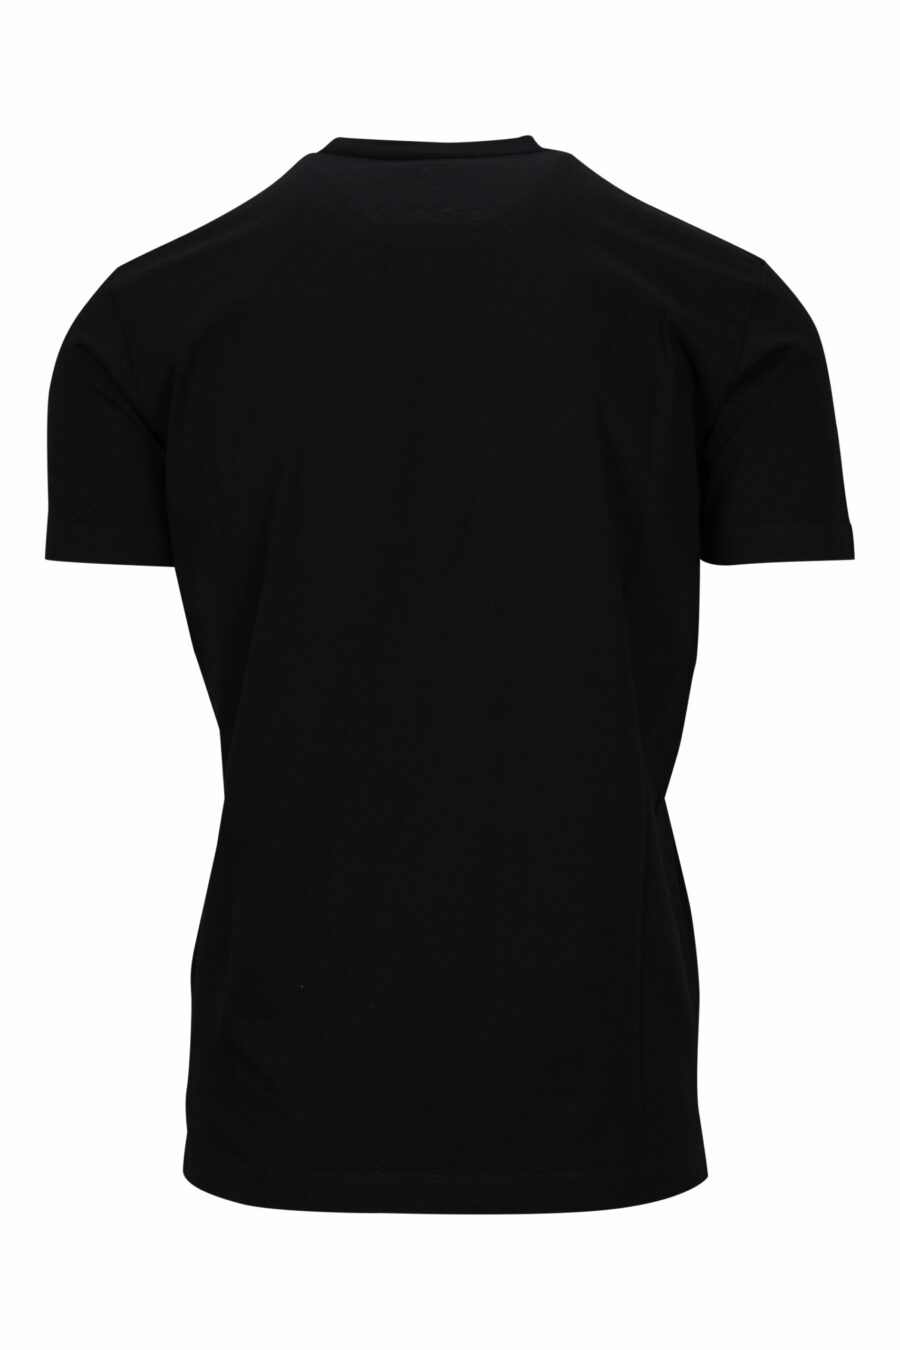 Schwarzes T-Shirt mit Basketball Hund maxilogo - 8054148332662 1 skaliert